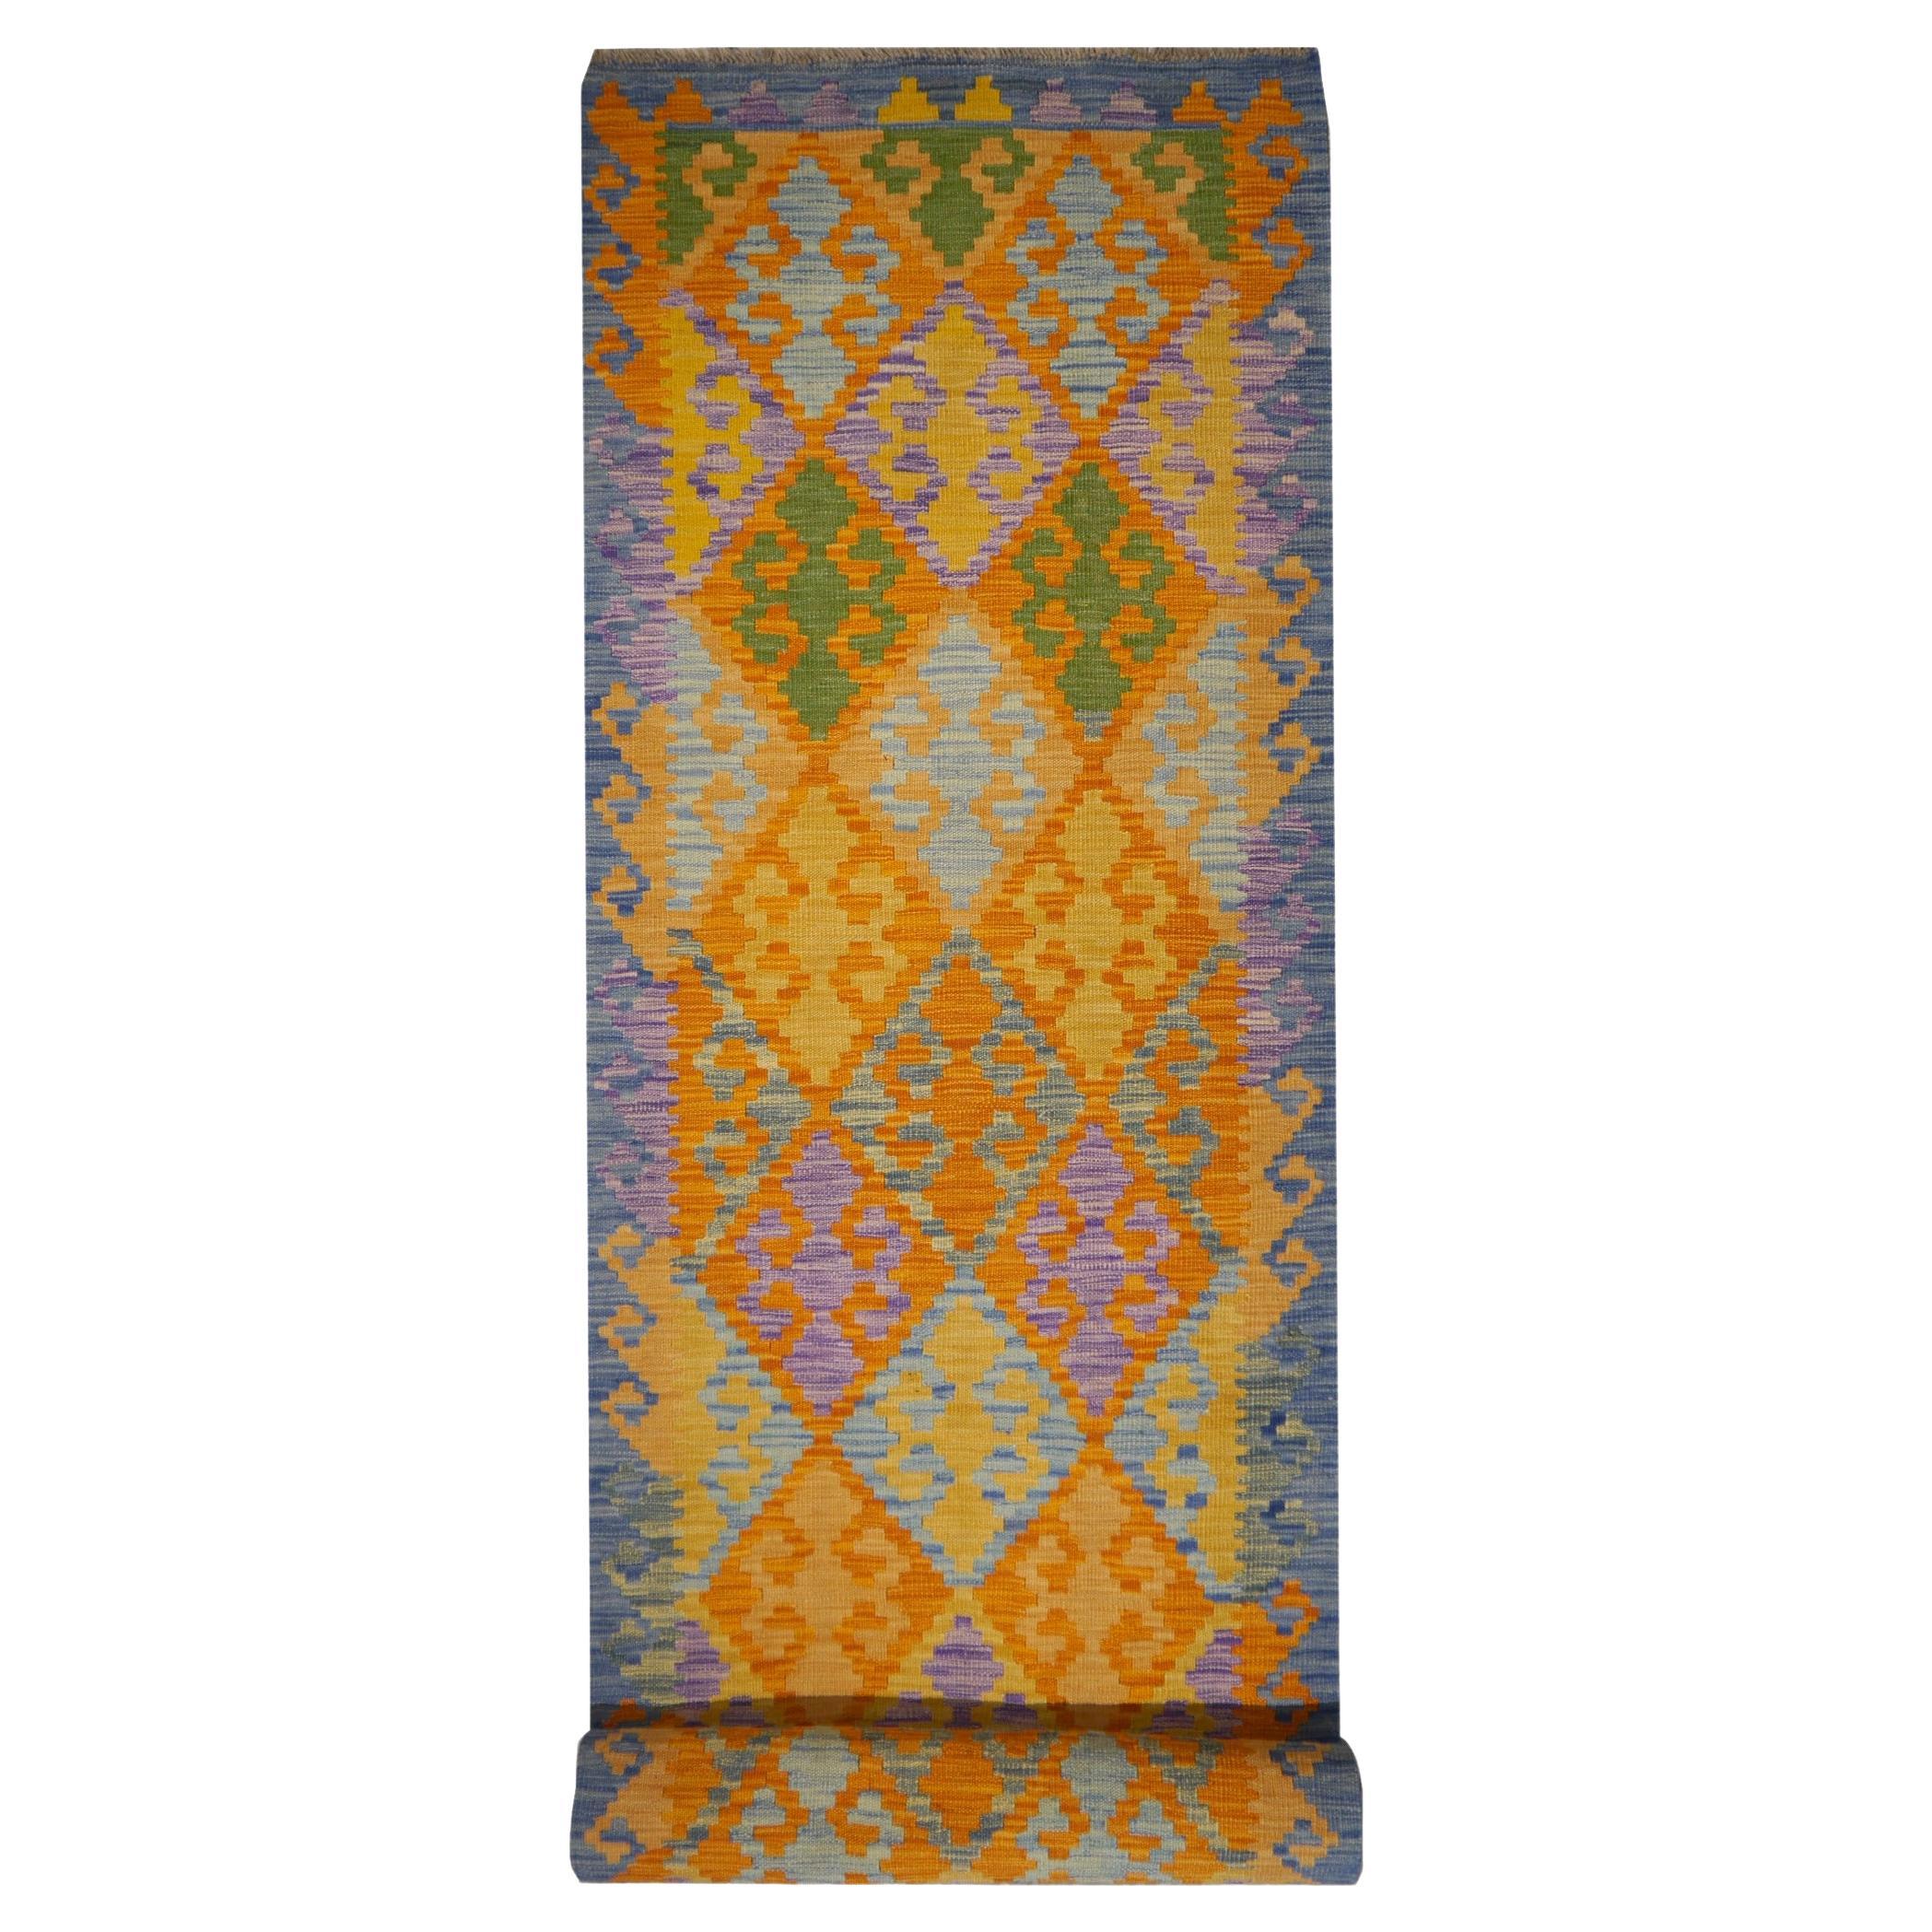 Kilim Rug Hallway Runner Wool Hand-Woven Blue Green Orange Lilac Turkish Design For Sale